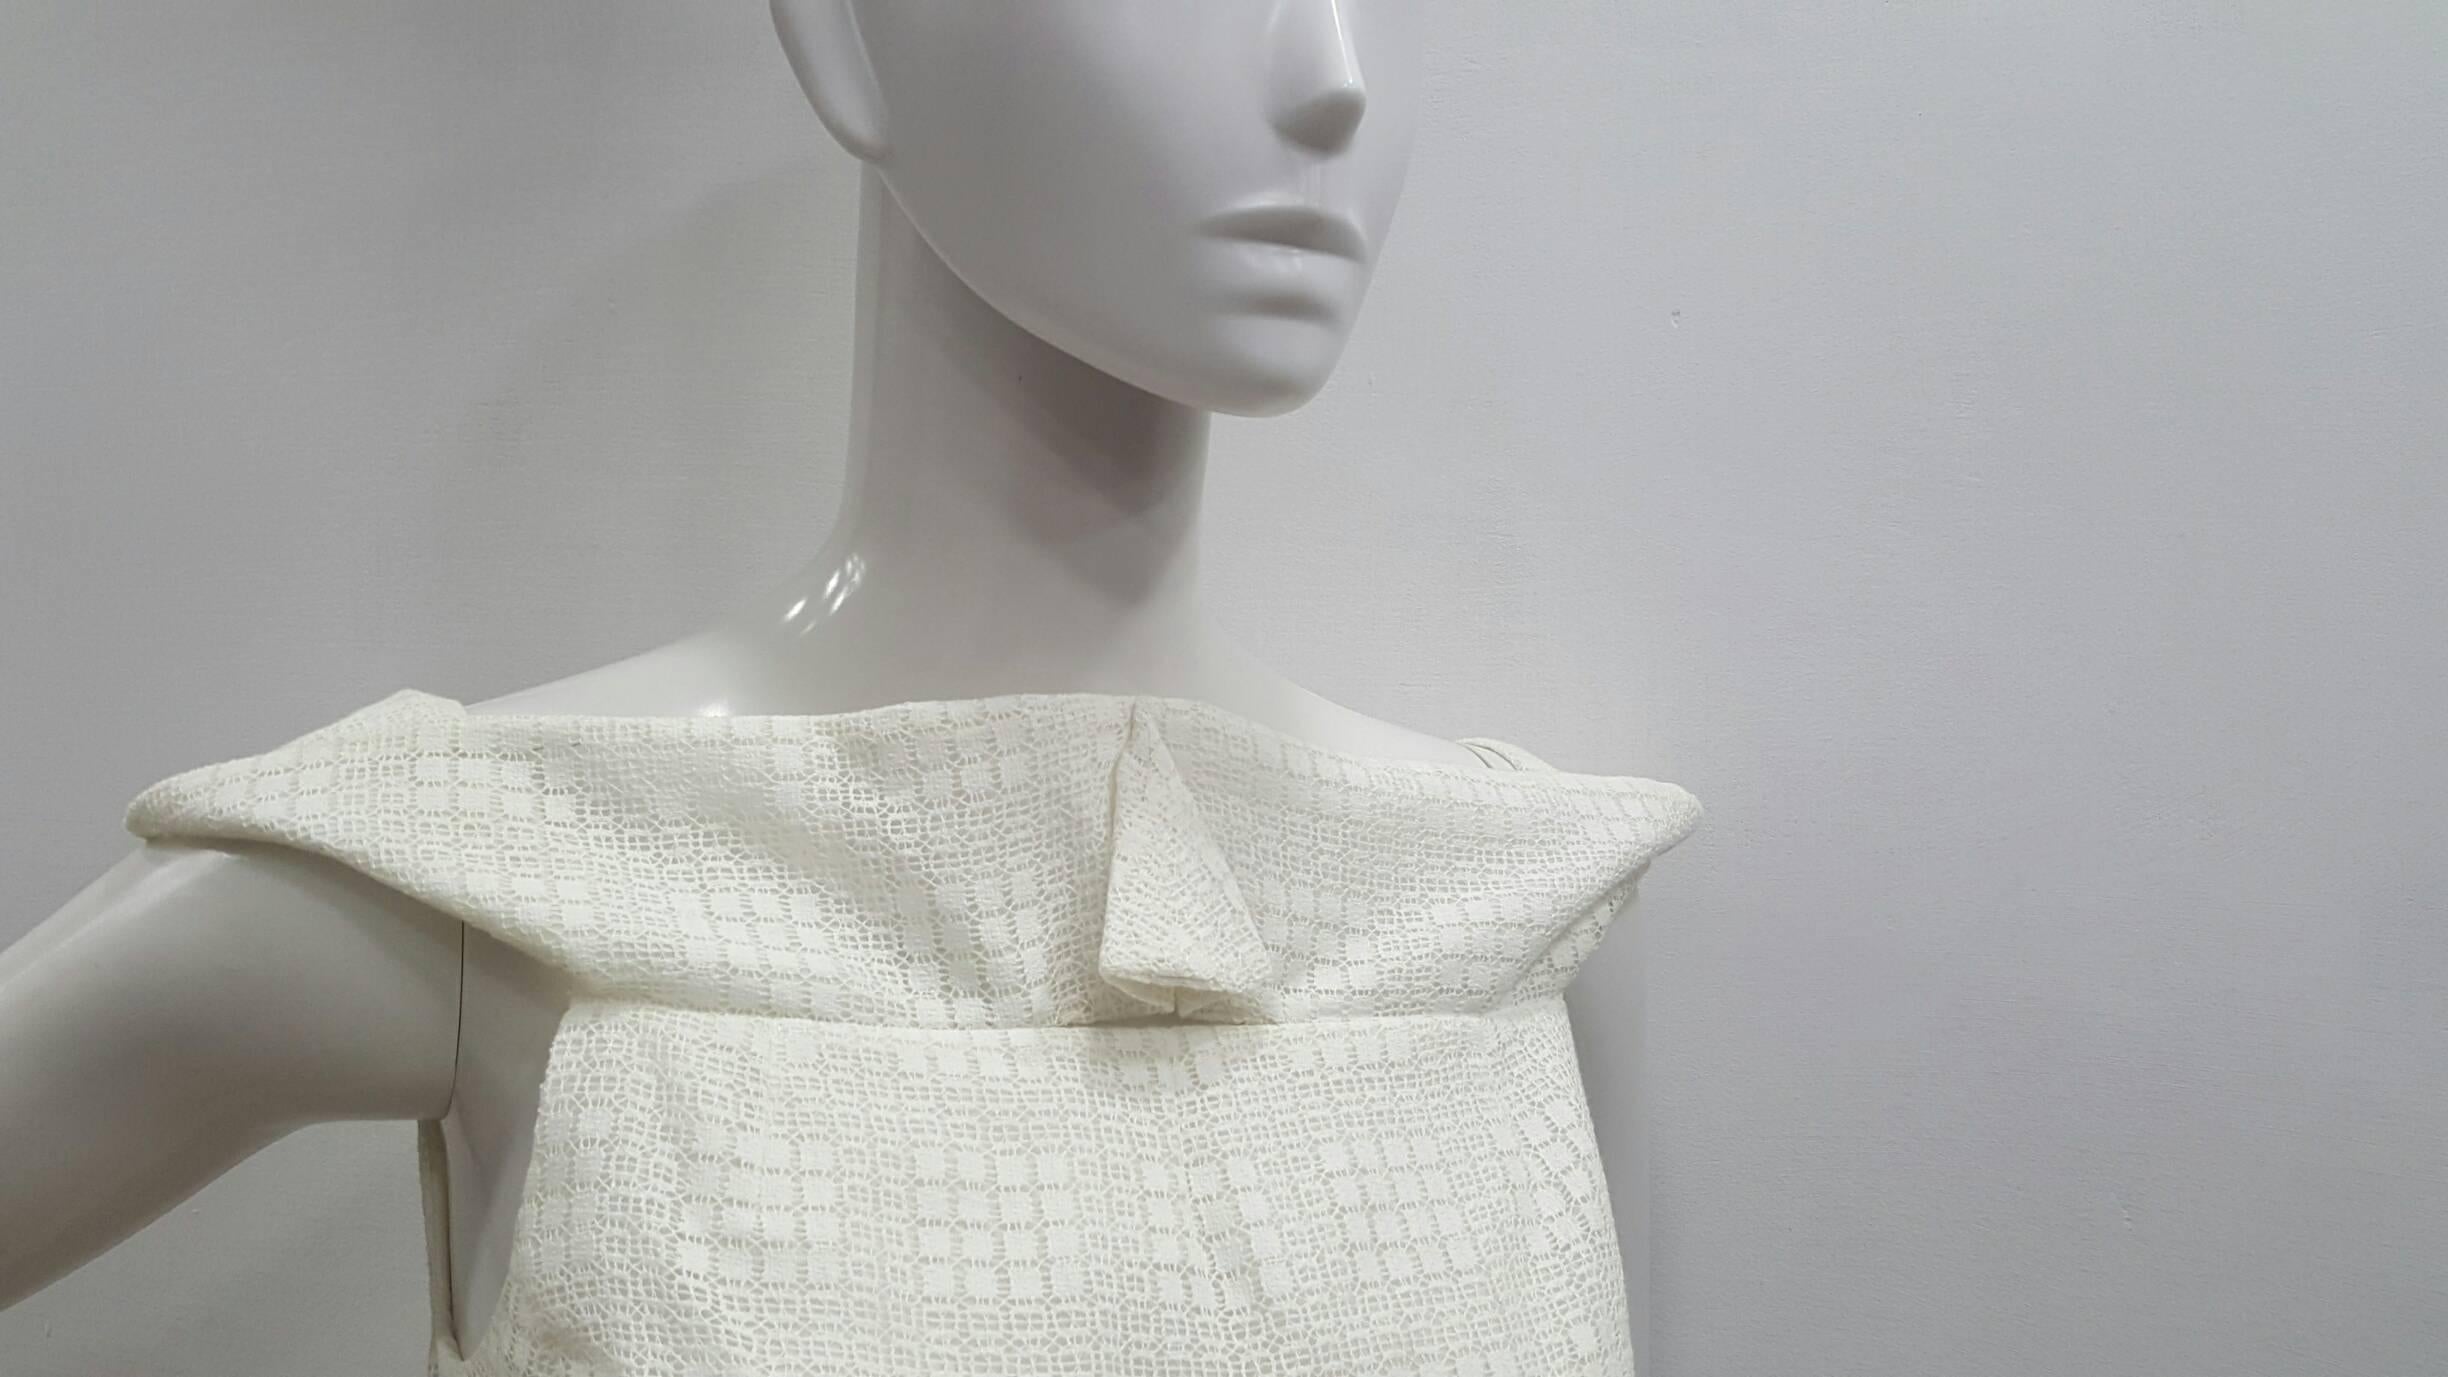 Gray 1990s Antonio Berardi White Dress